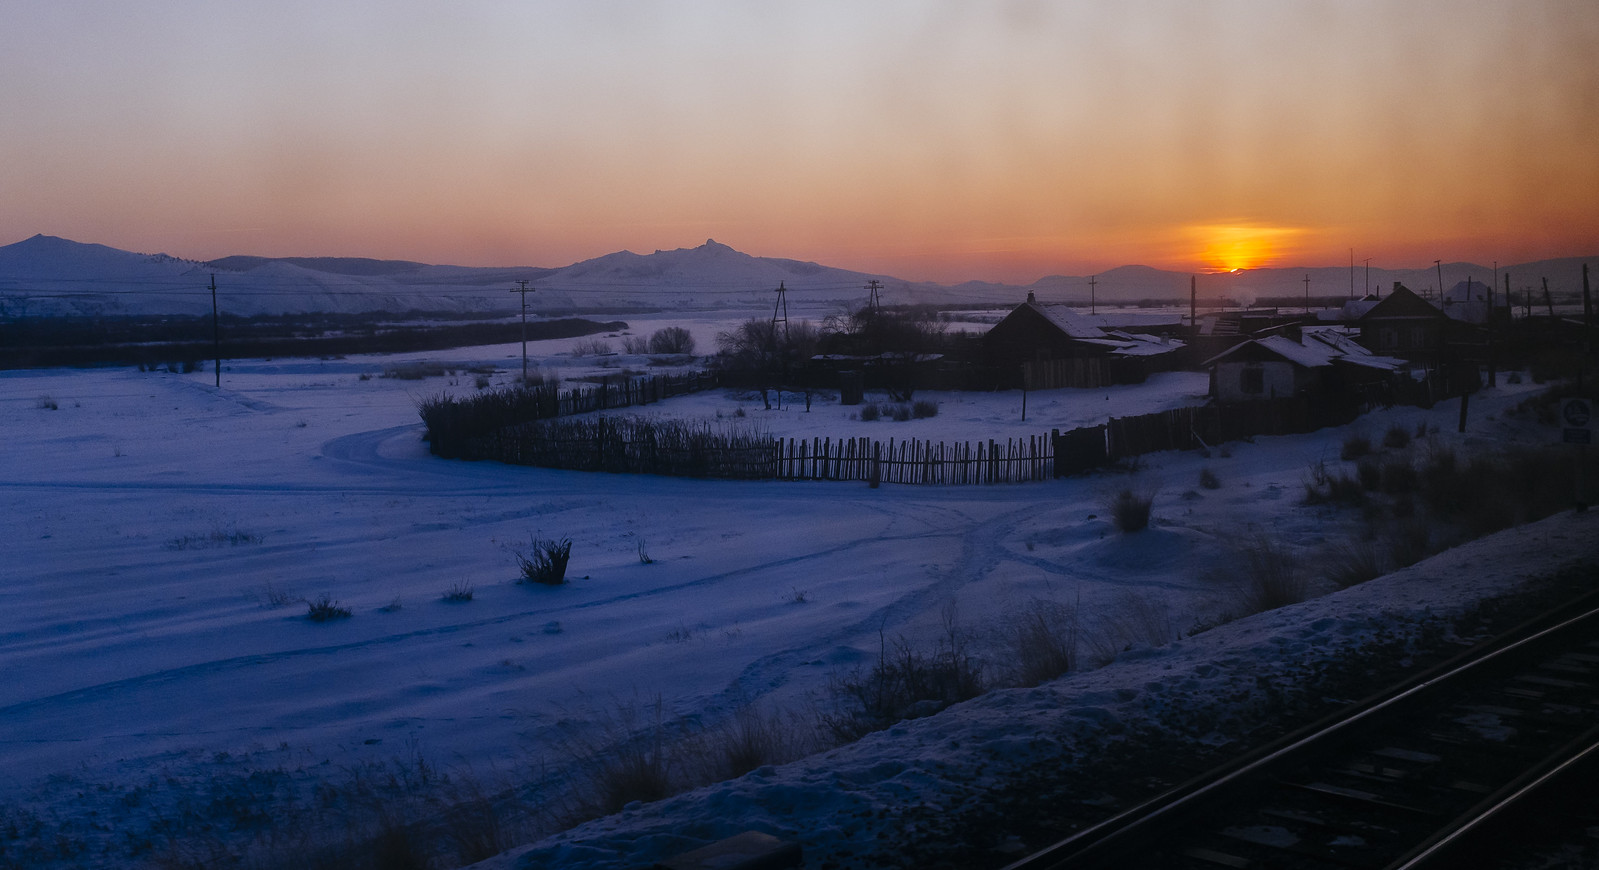 Travel Trans Siberian Railway | Sunset In Siberia